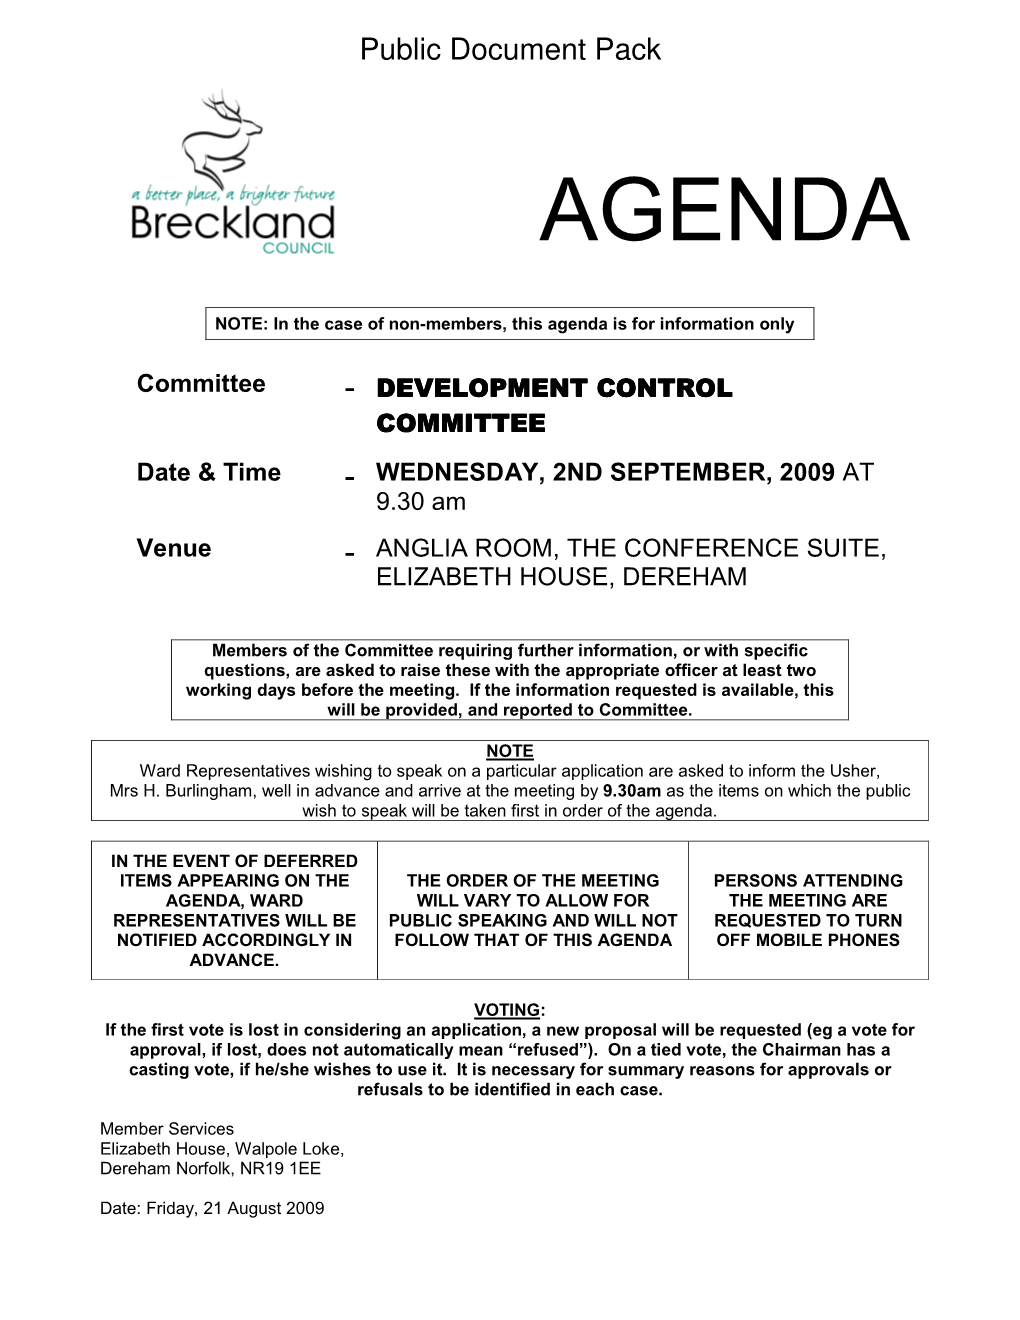 Agenda Reports Pack (Public) 02/09/2009, 09:30